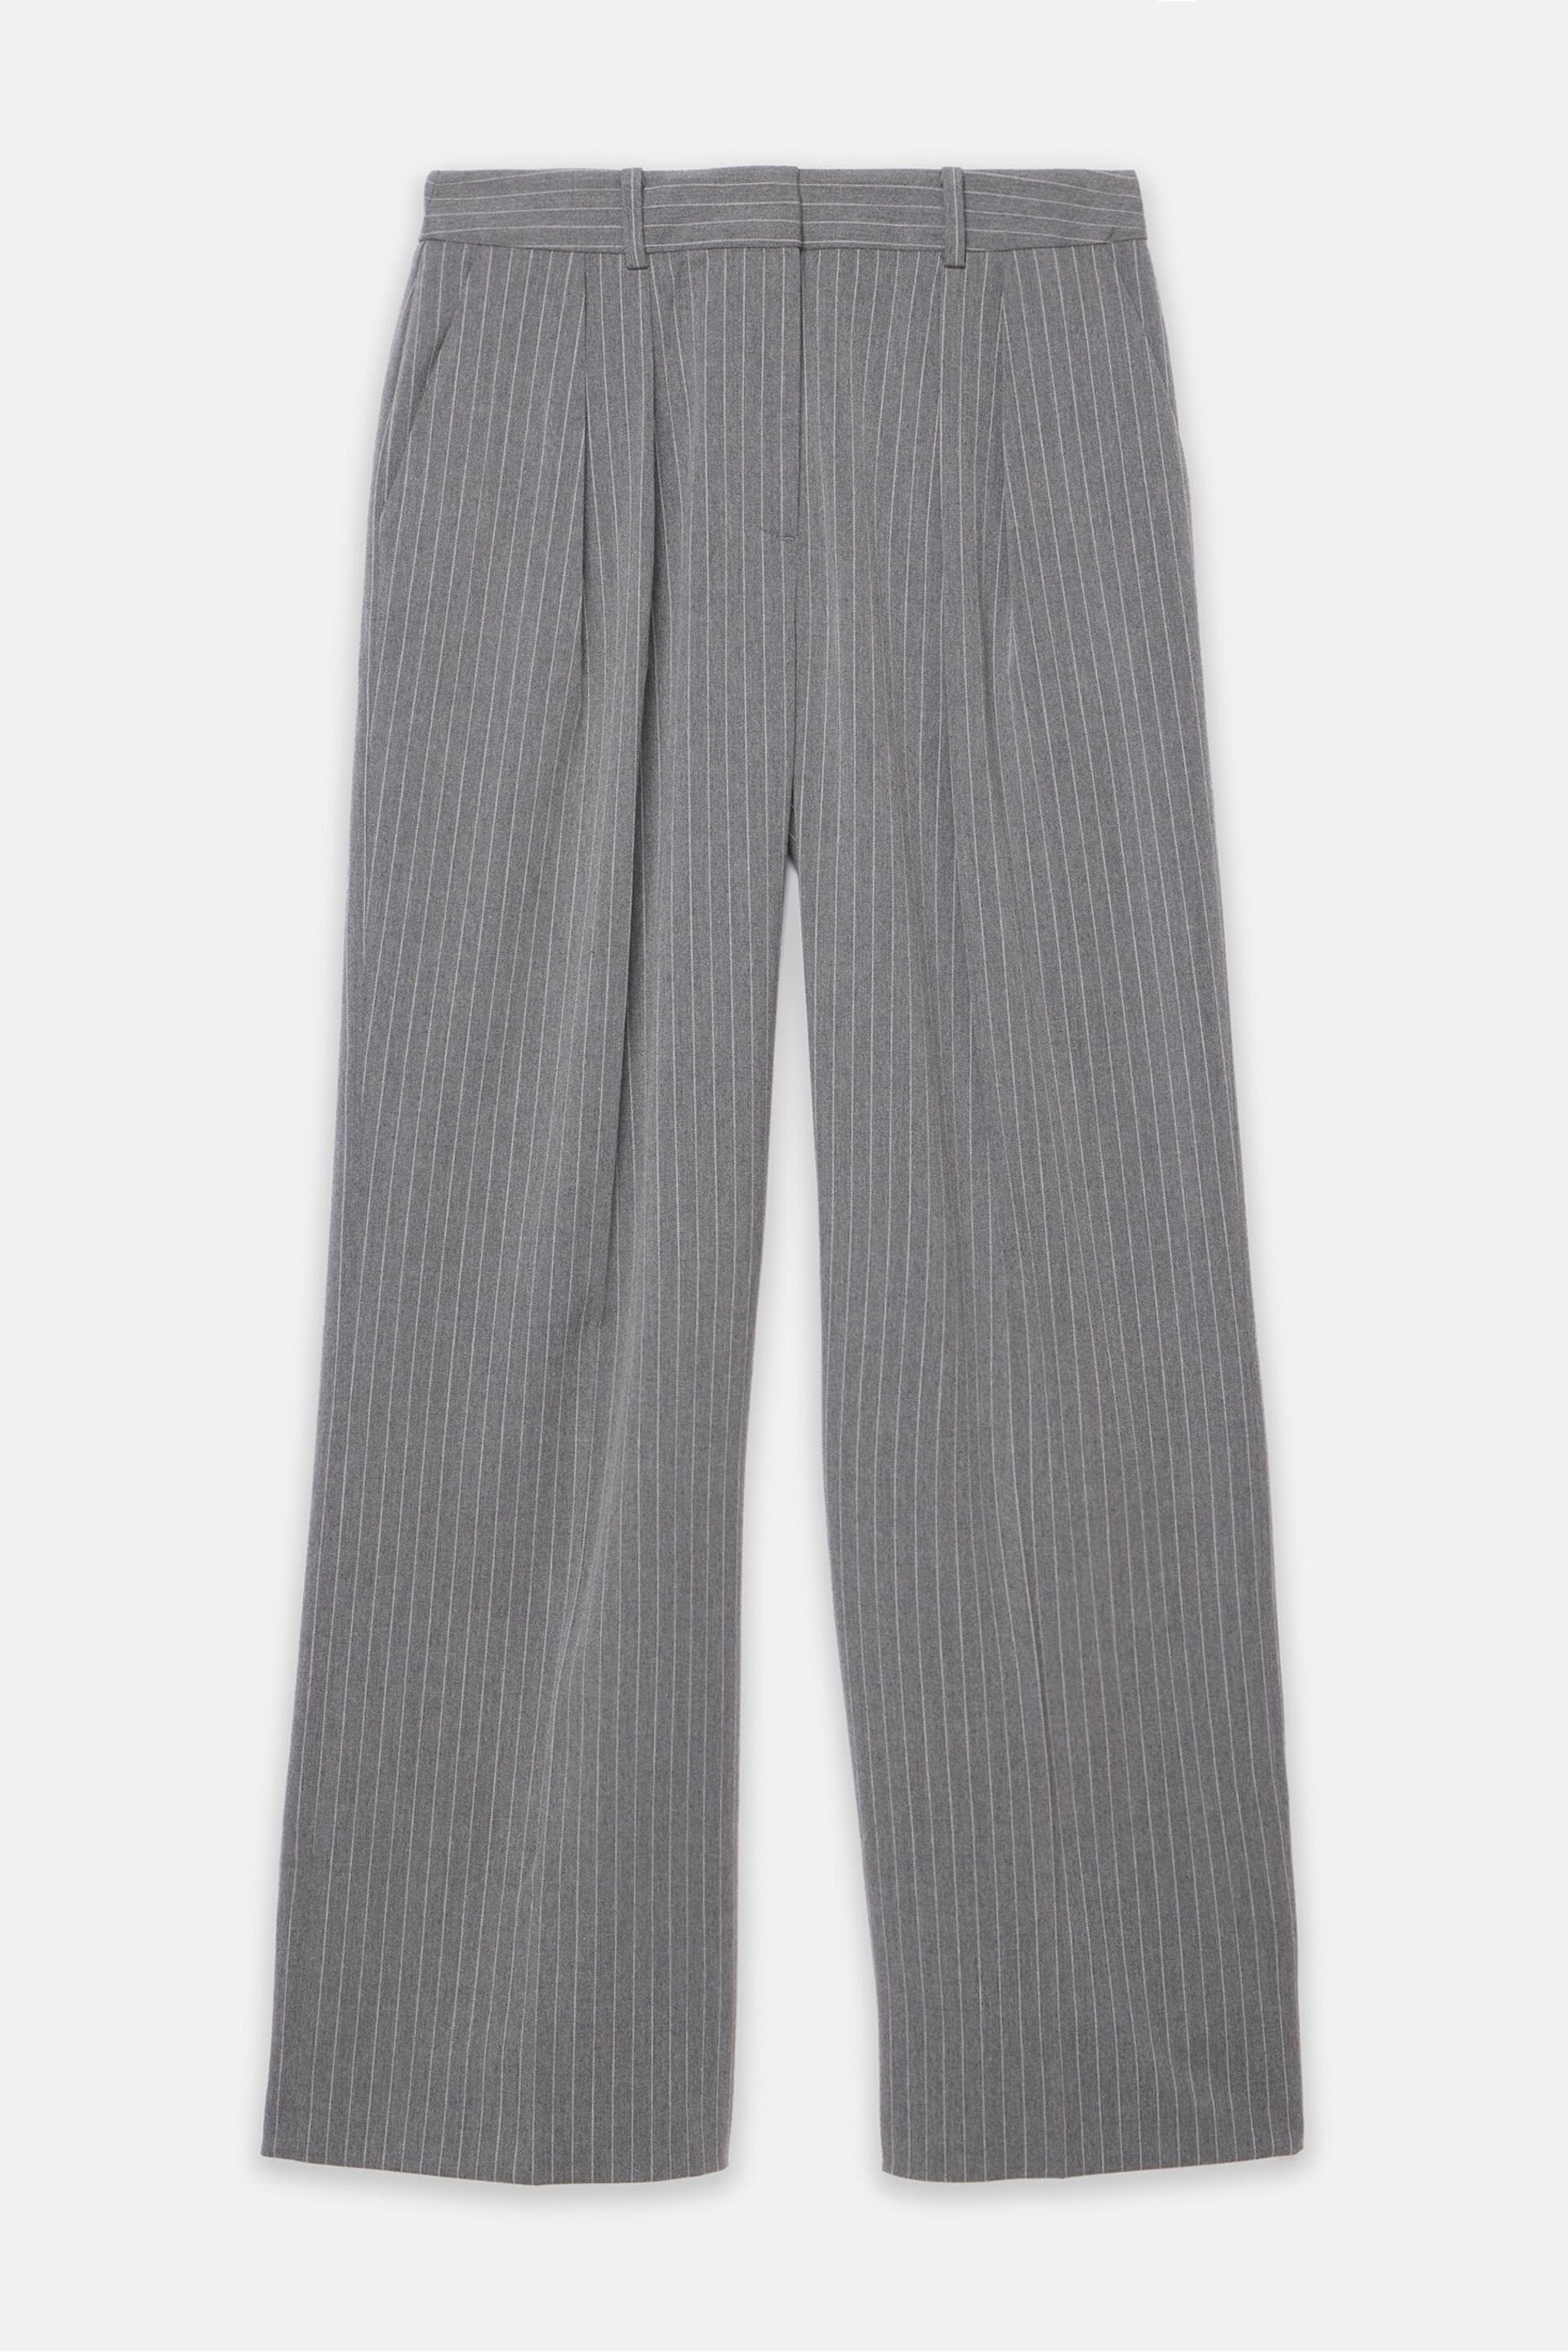 Mint Velvet Grey Pinstripe Wide Trousers - Image 3 of 3